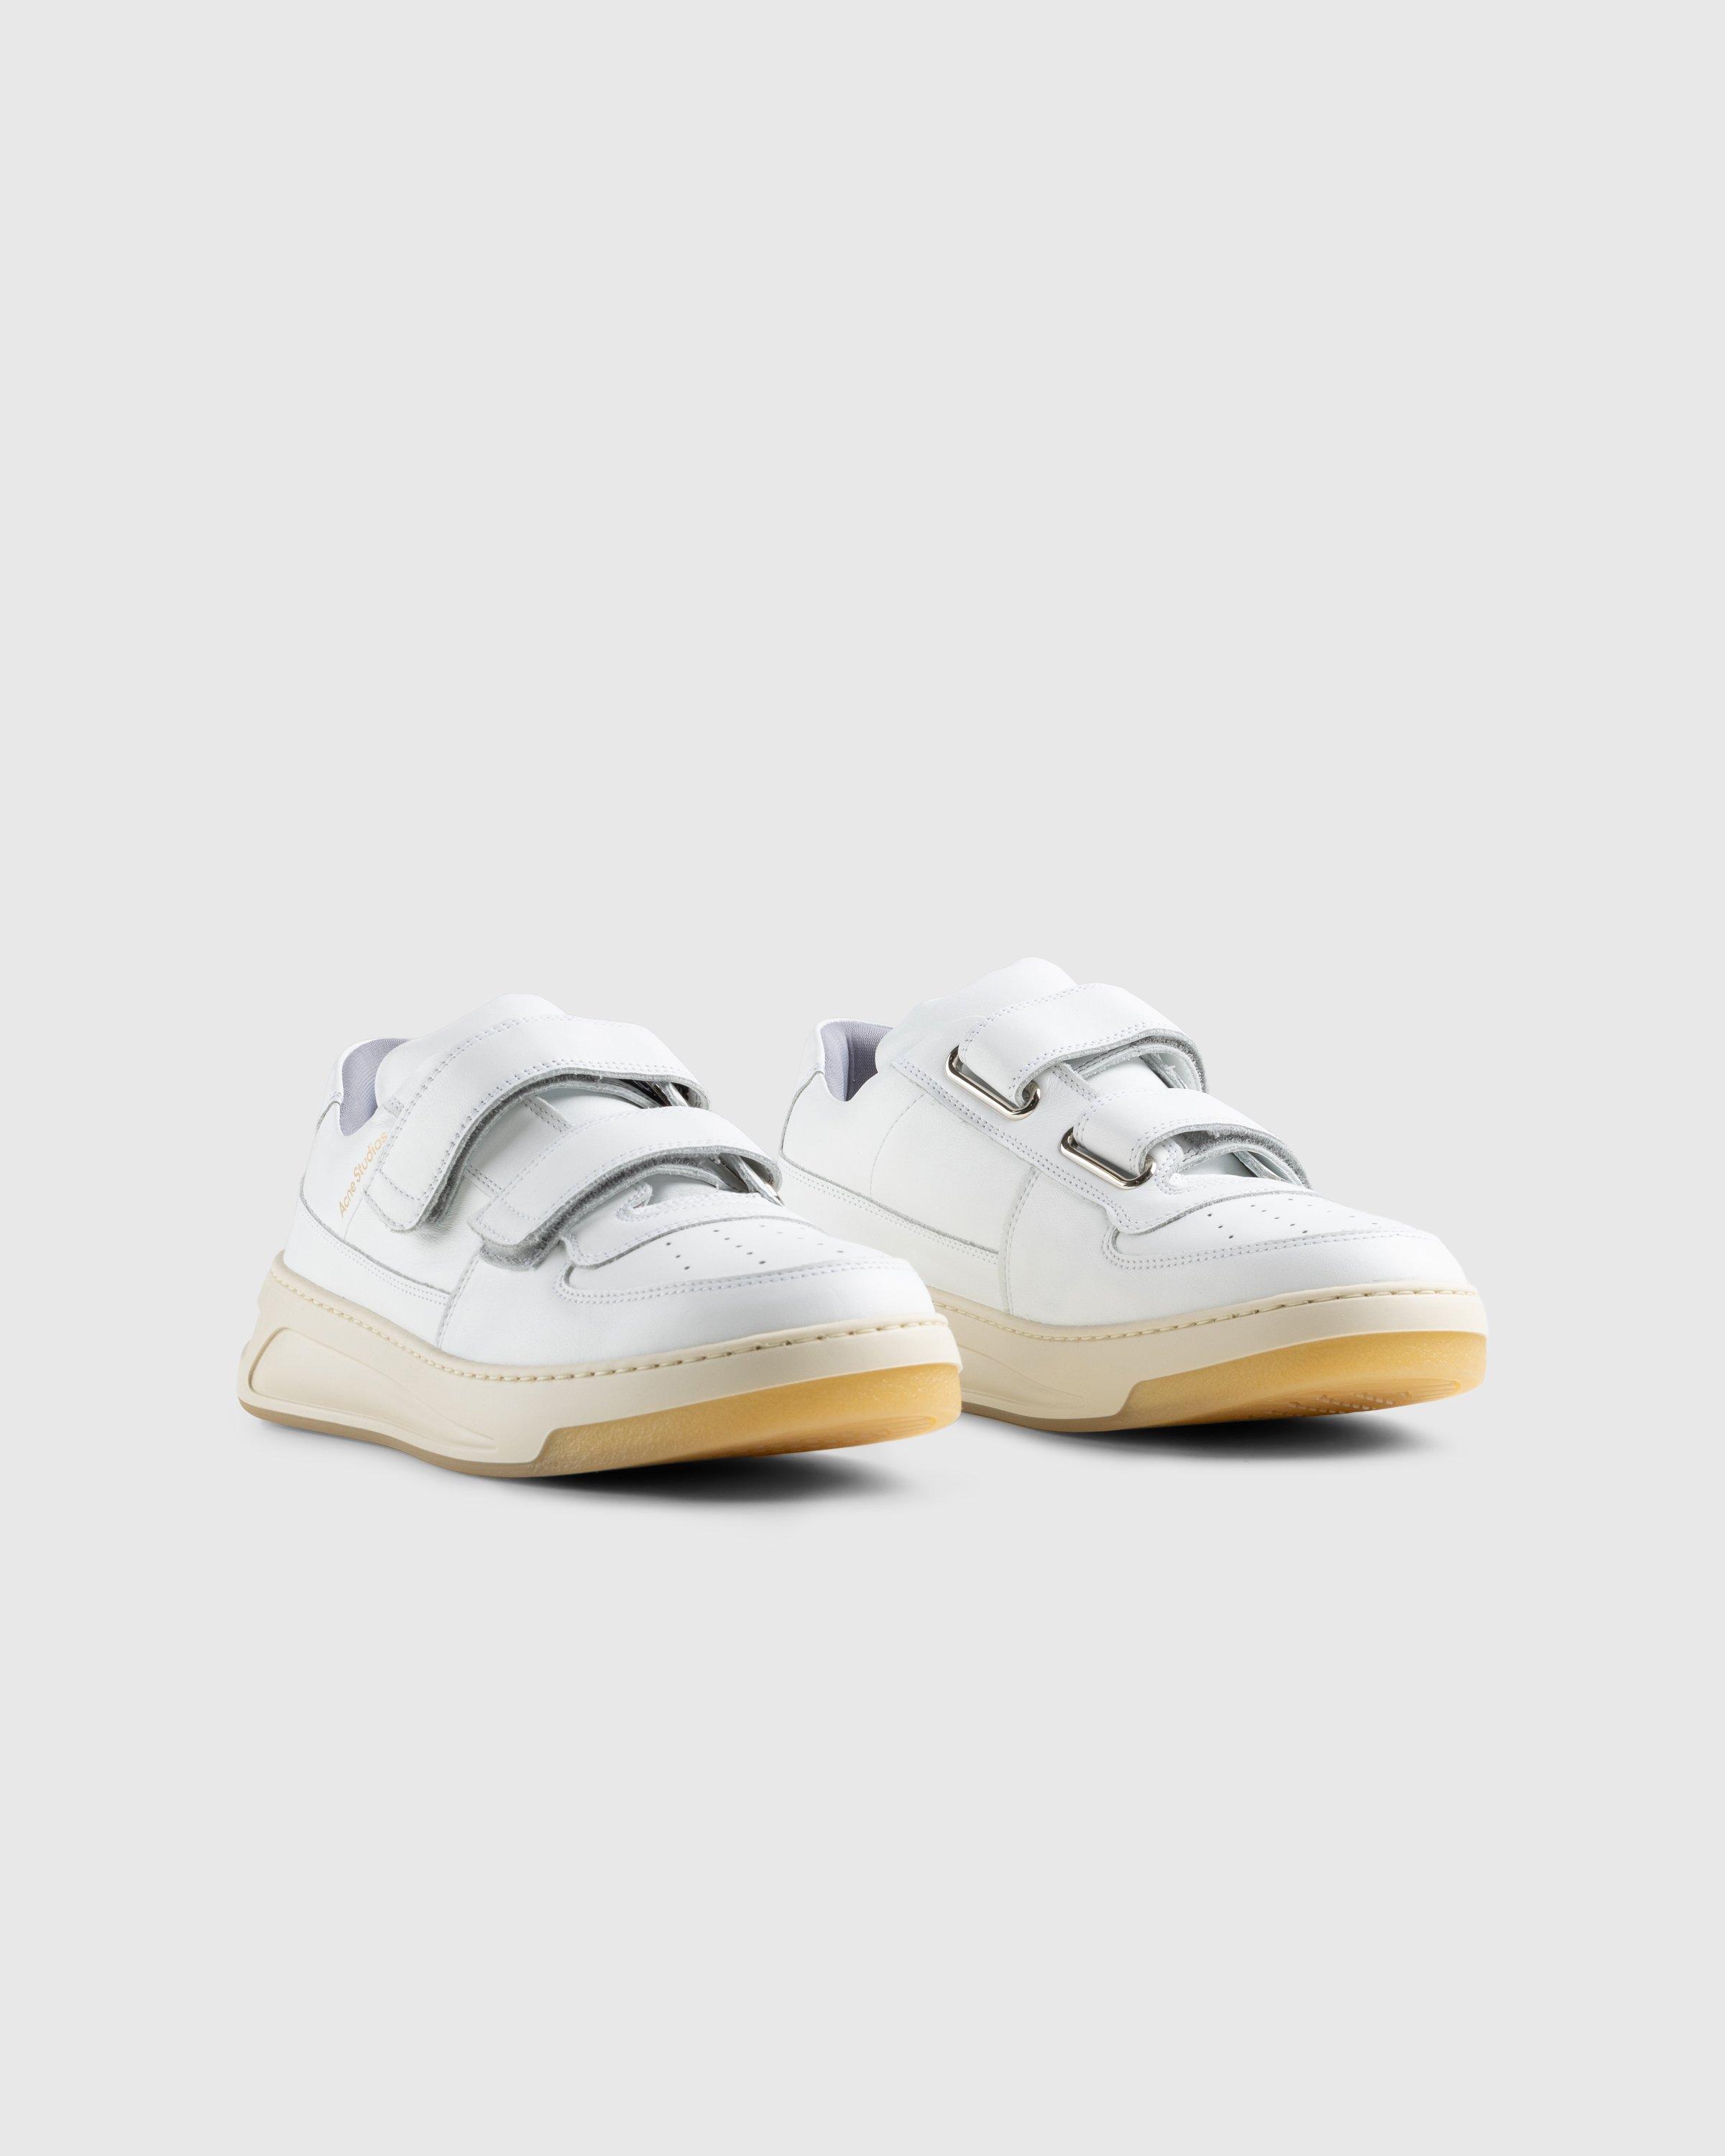 Acne Studios - PEREY FRIEND WHITE - Footwear - White - Image 3